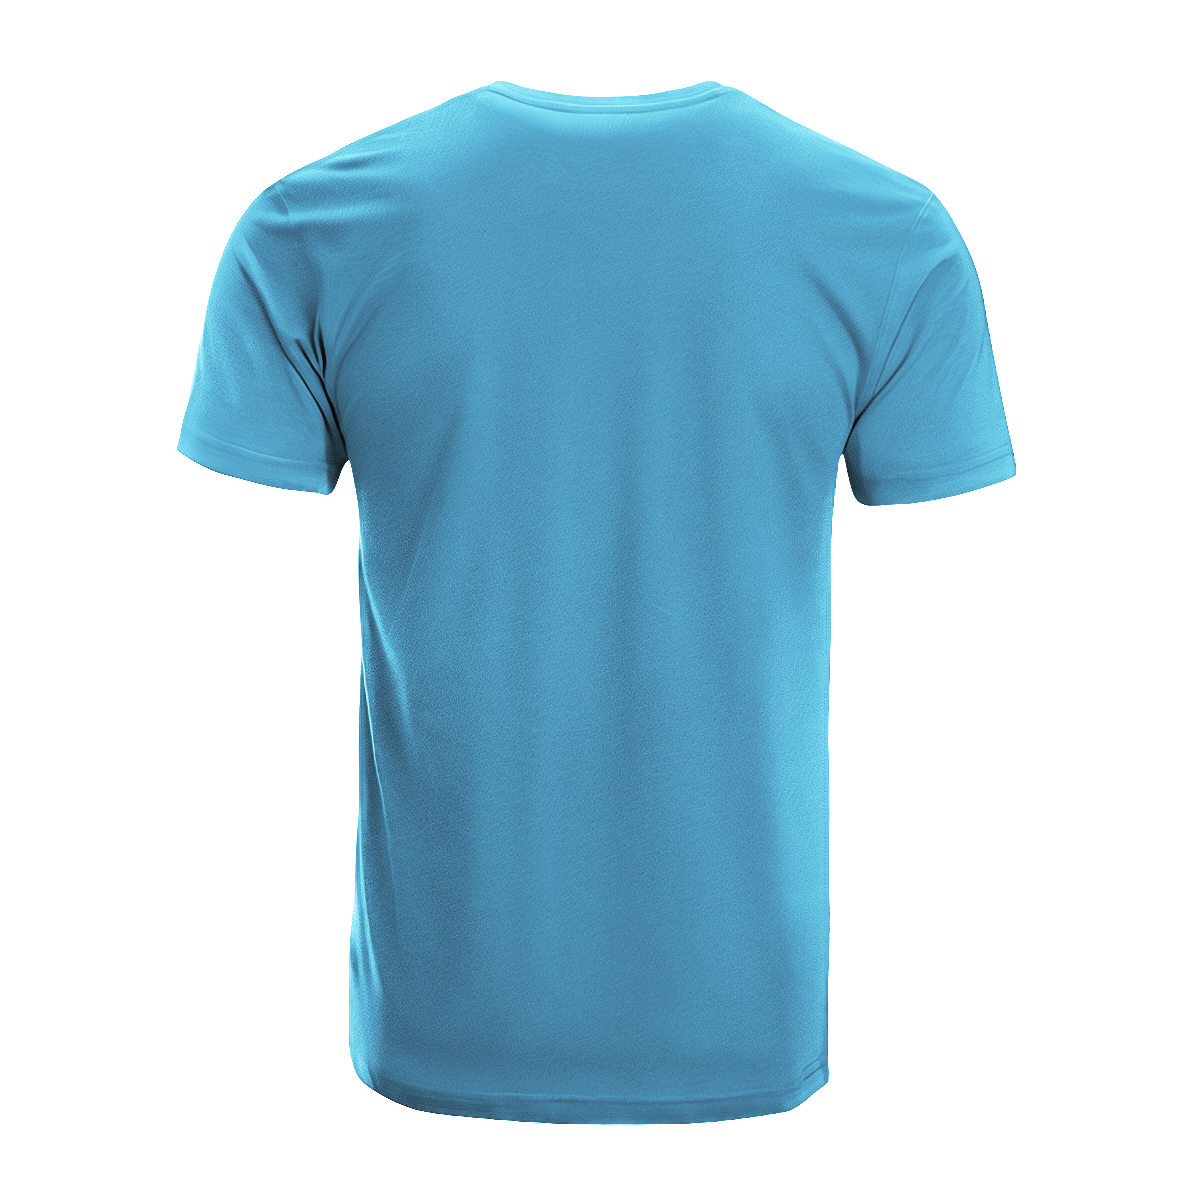 Fleming Tartan Crest T-shirt - I'm not yelling style